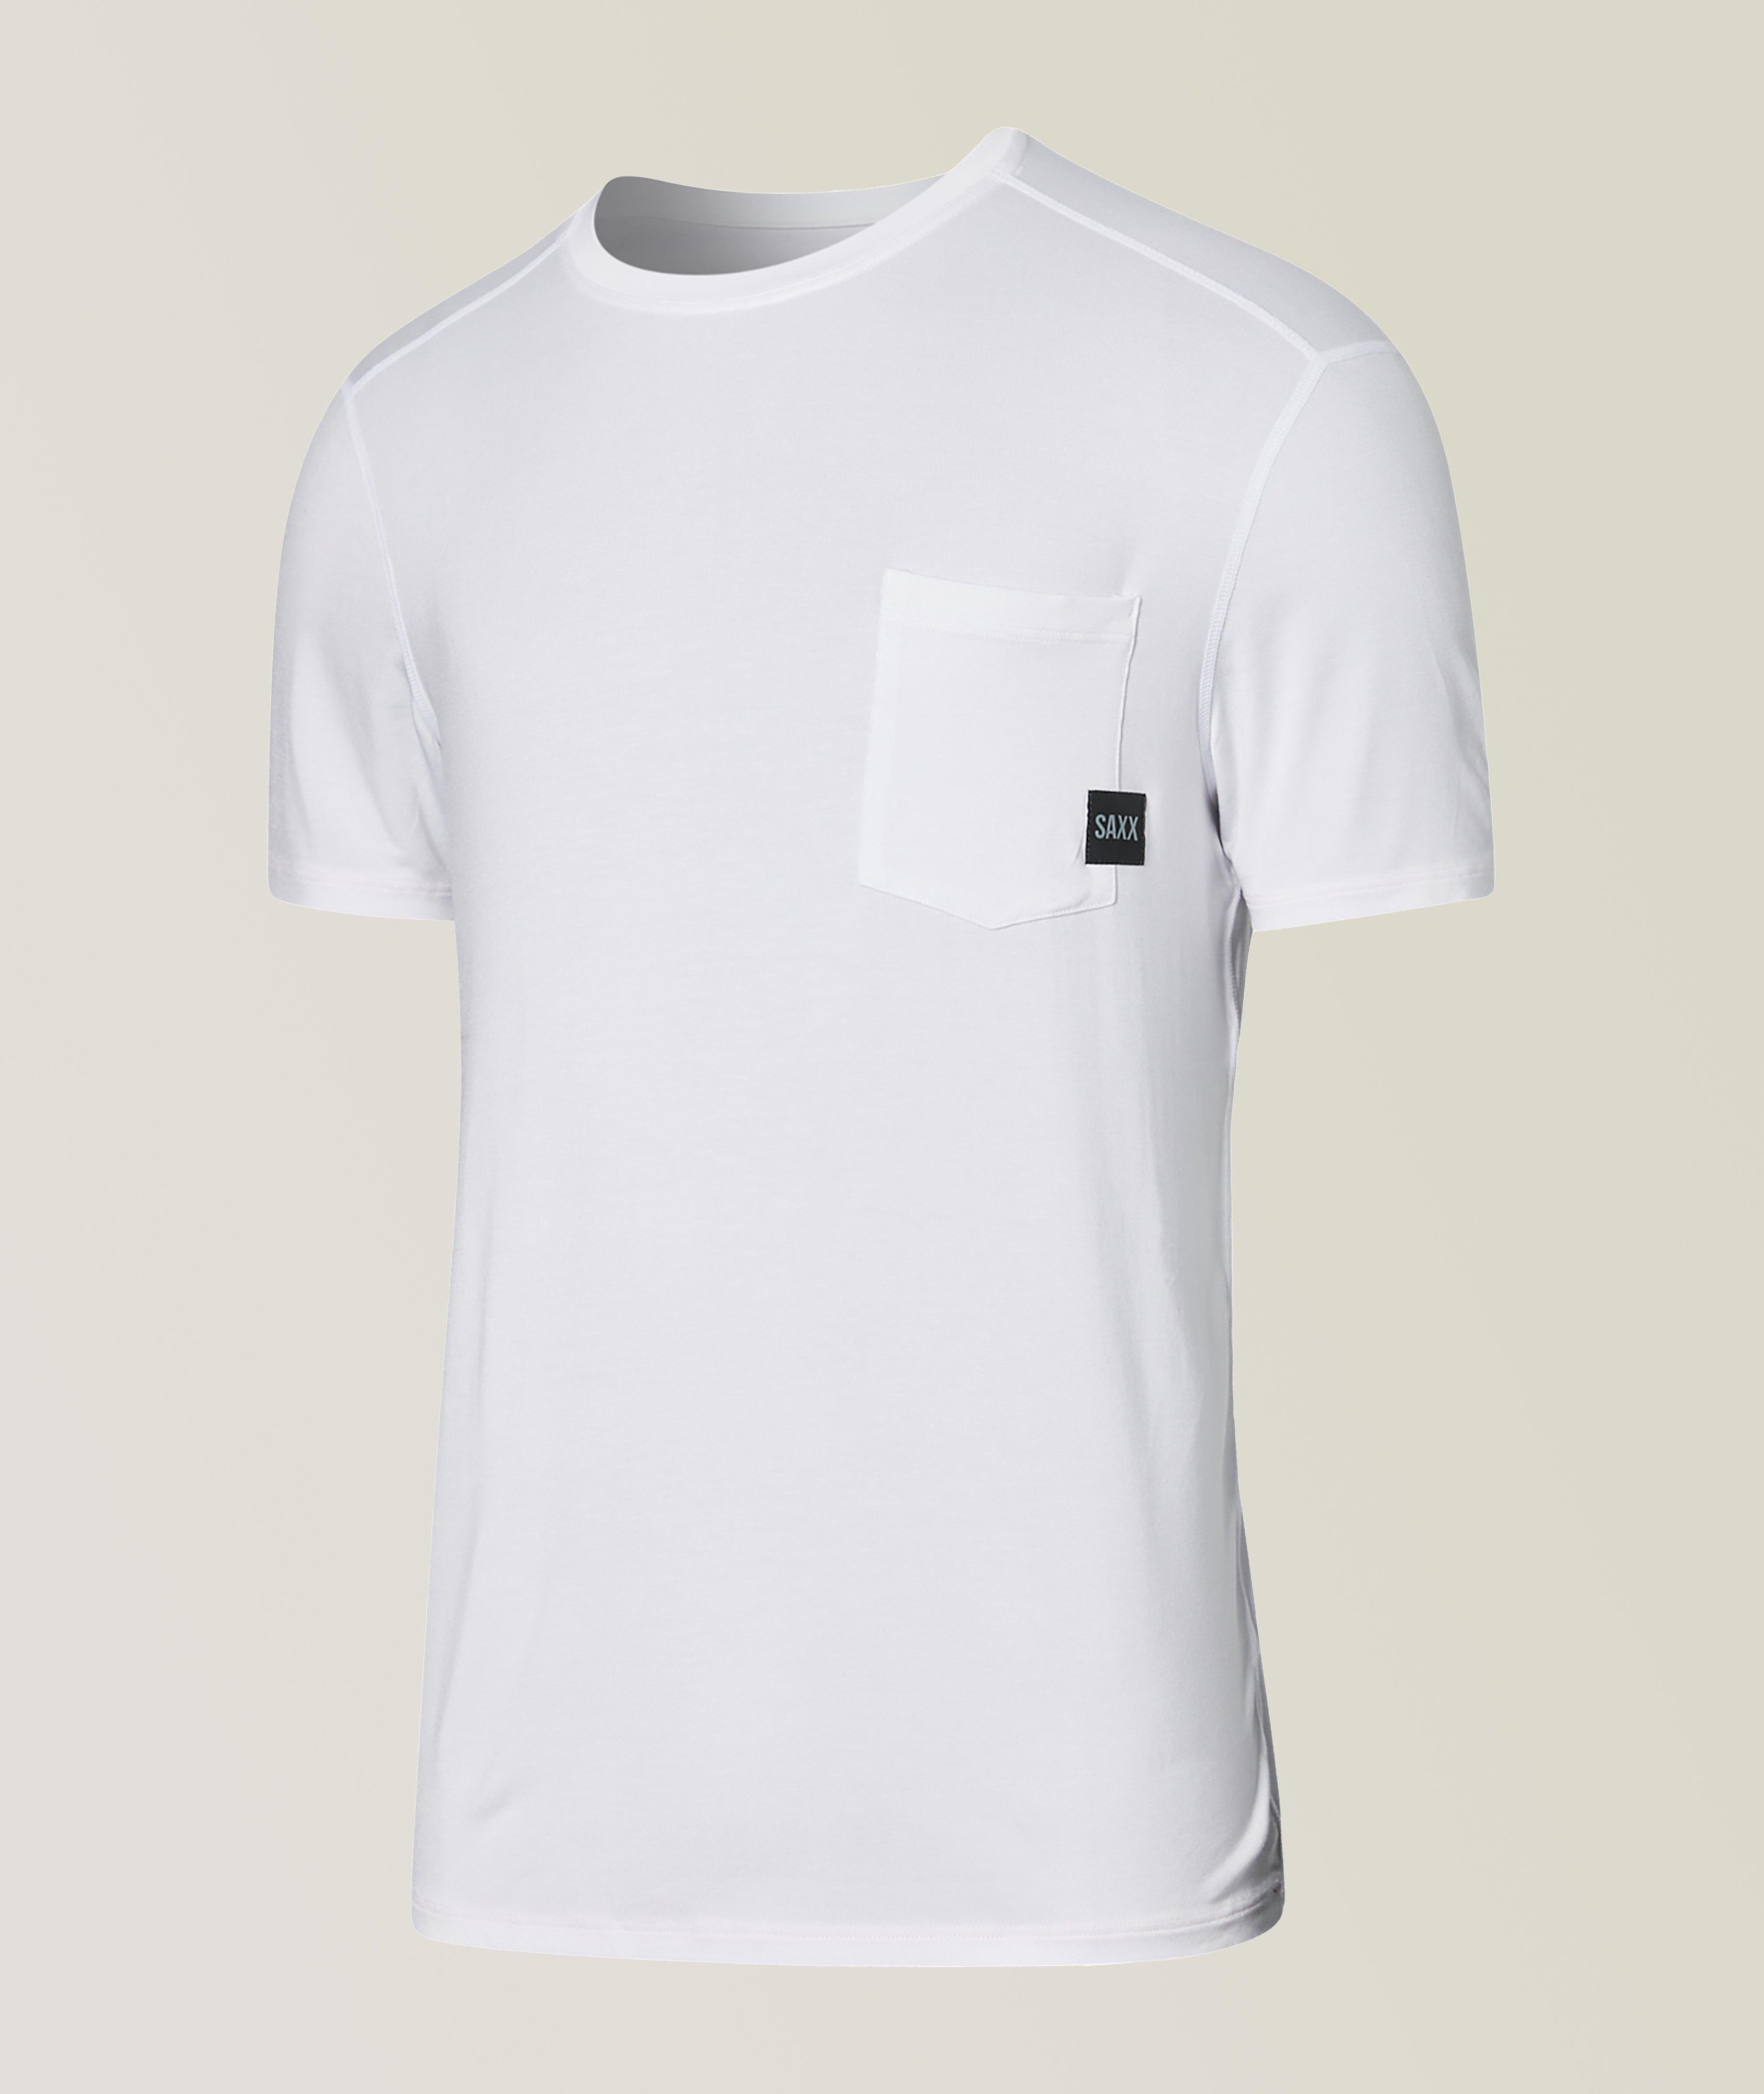 Modal Pocket Sleepwalker T-Shirt image 0